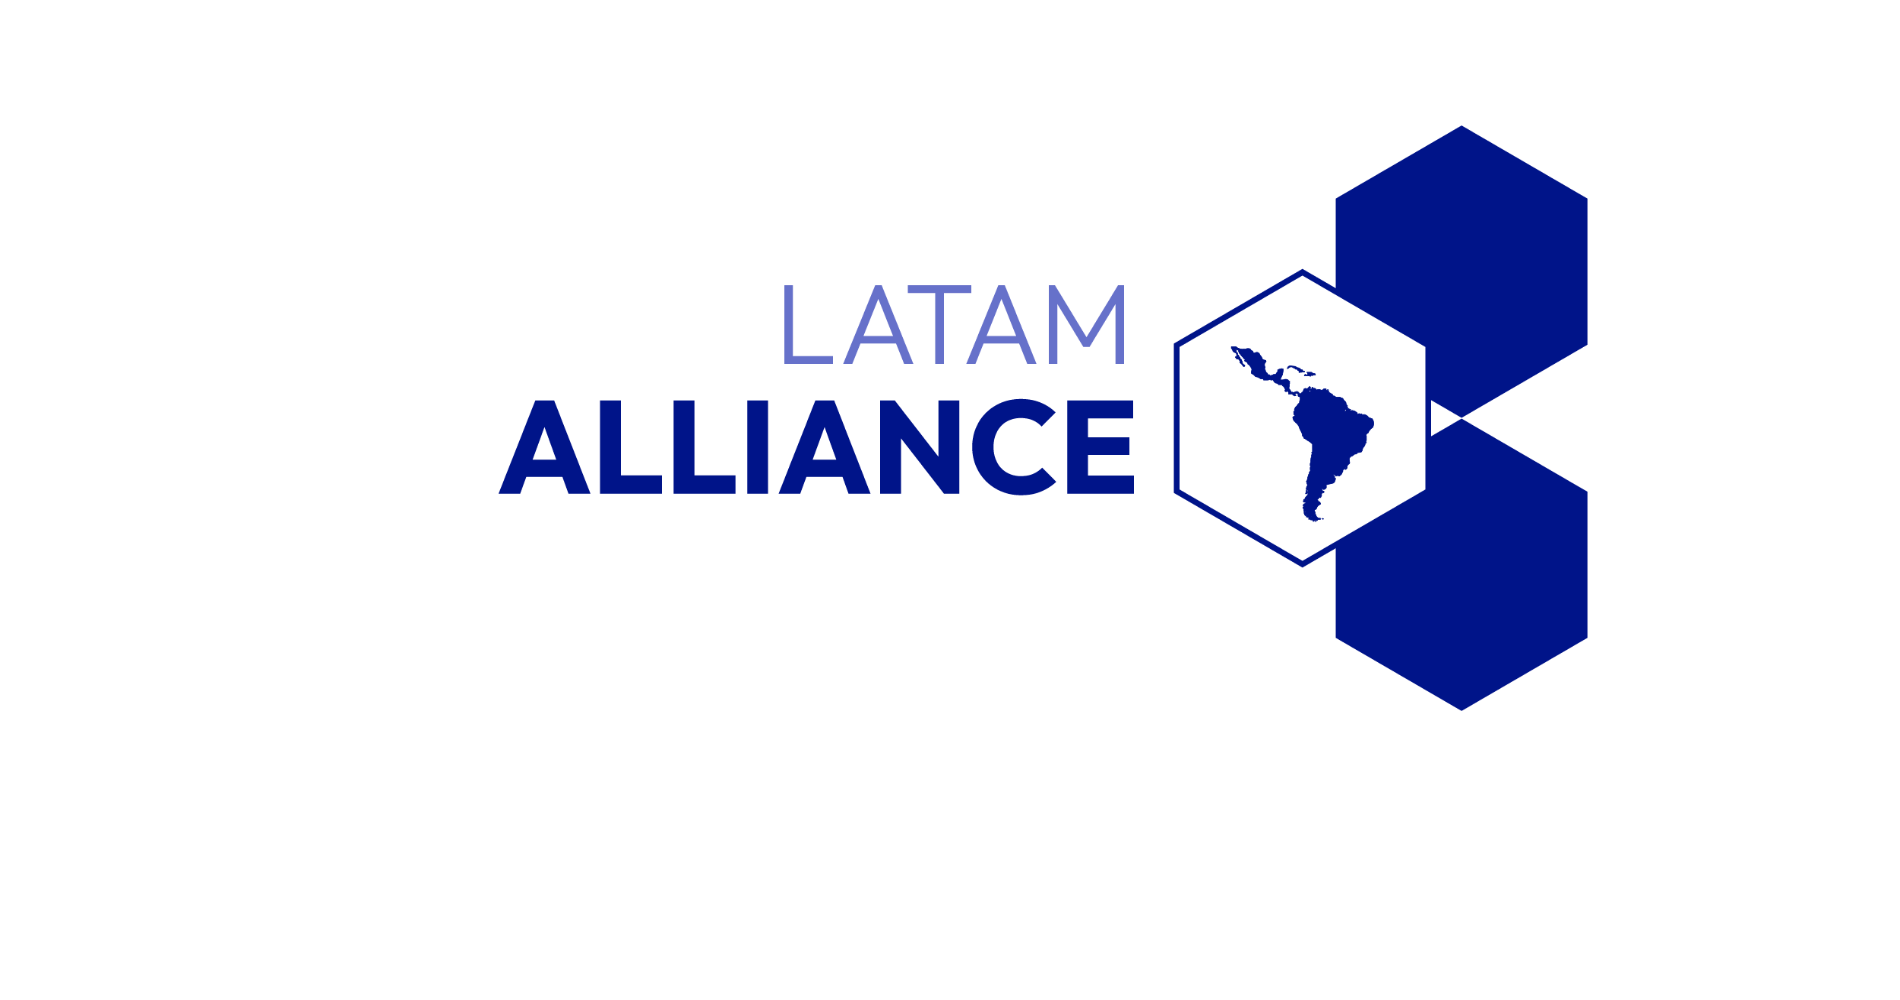 Alliance Logo - 600-14